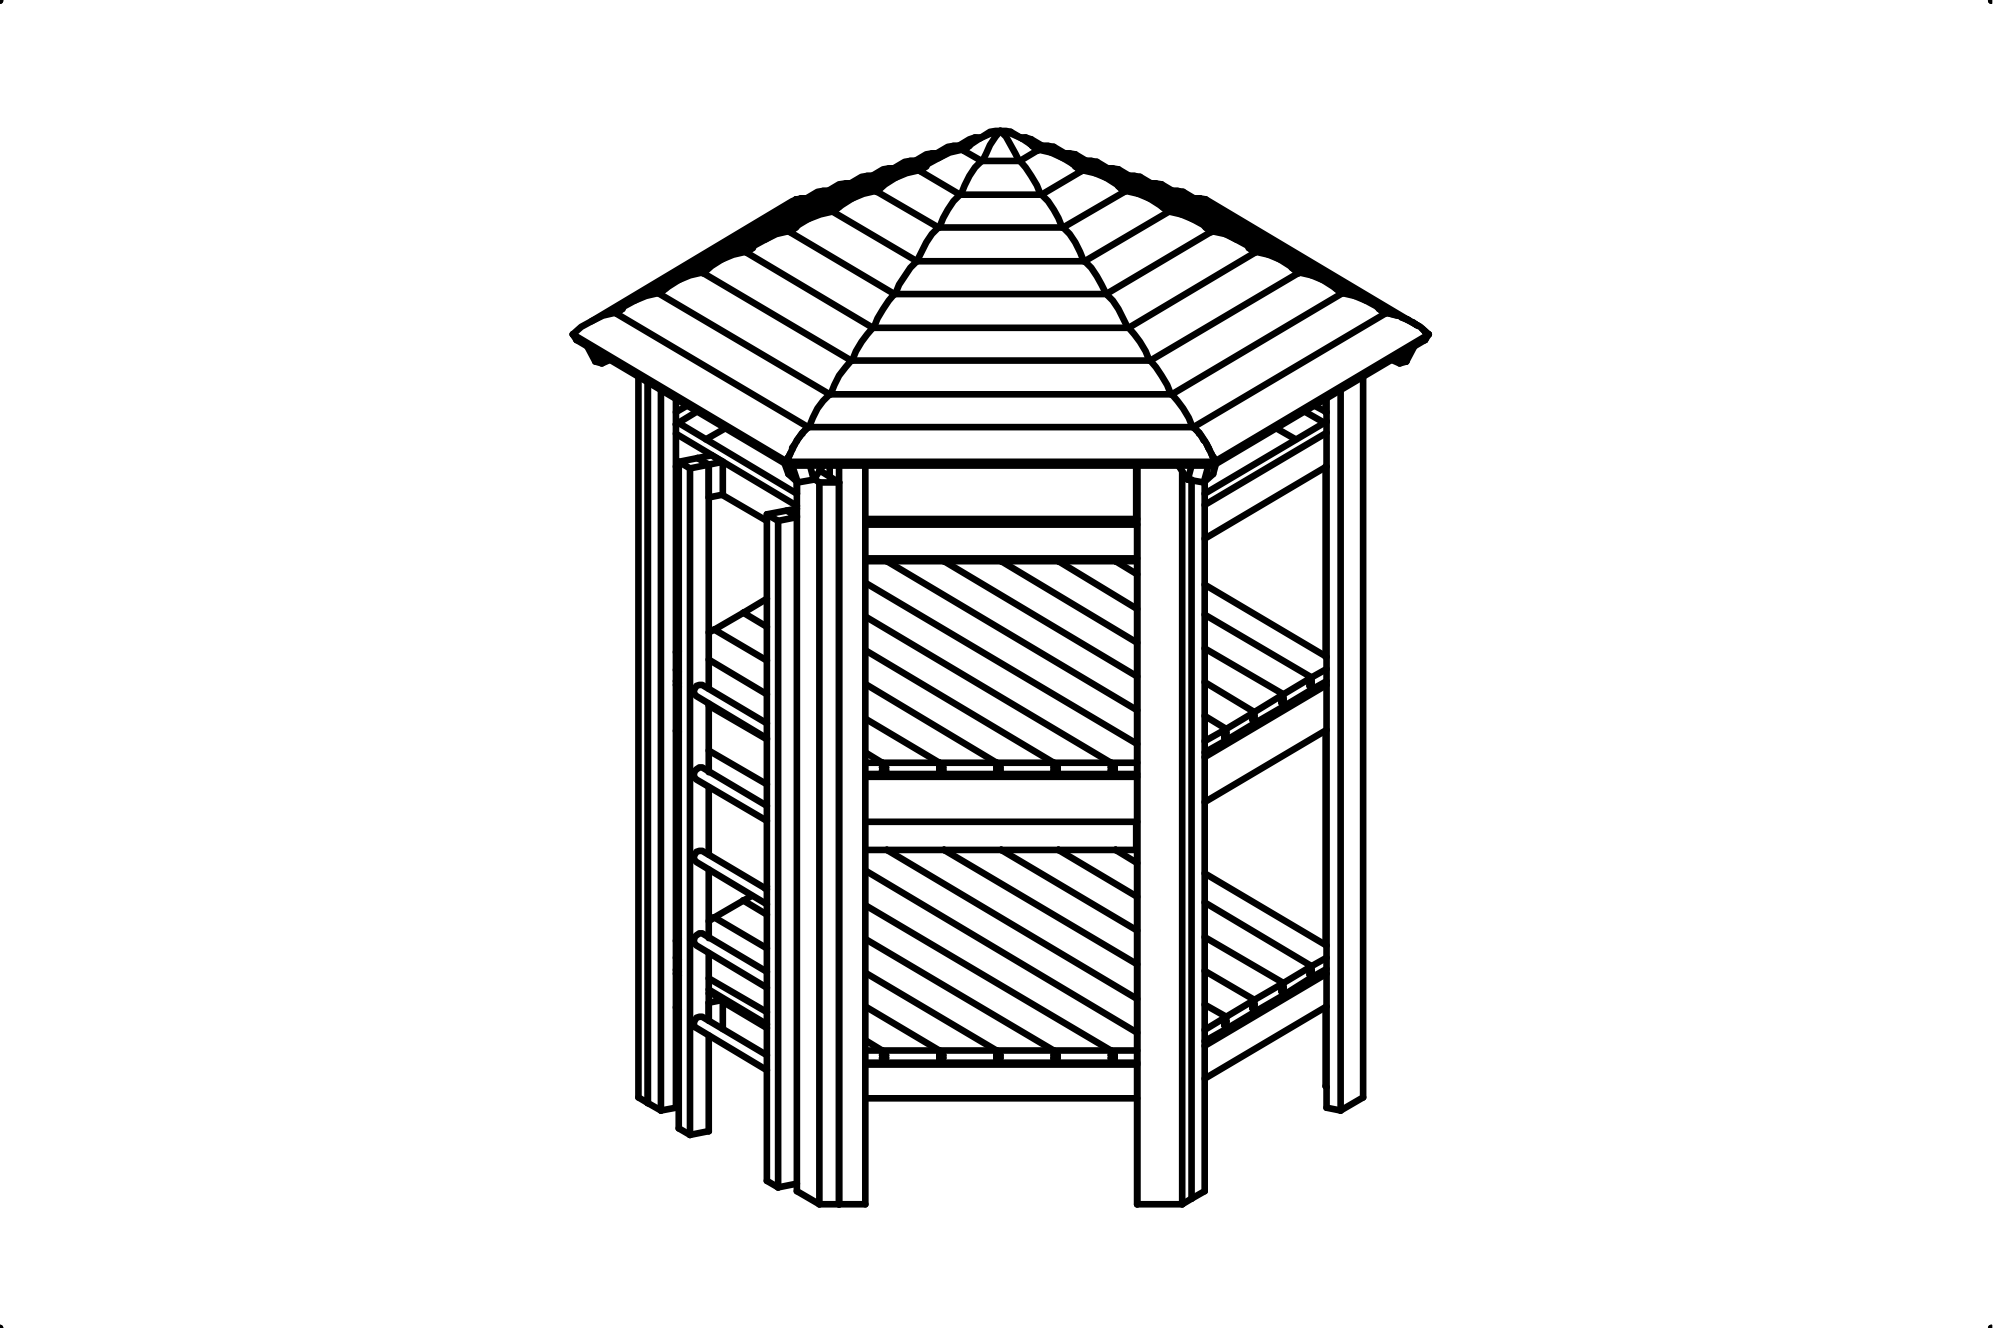 Hexagonal Hut with roof